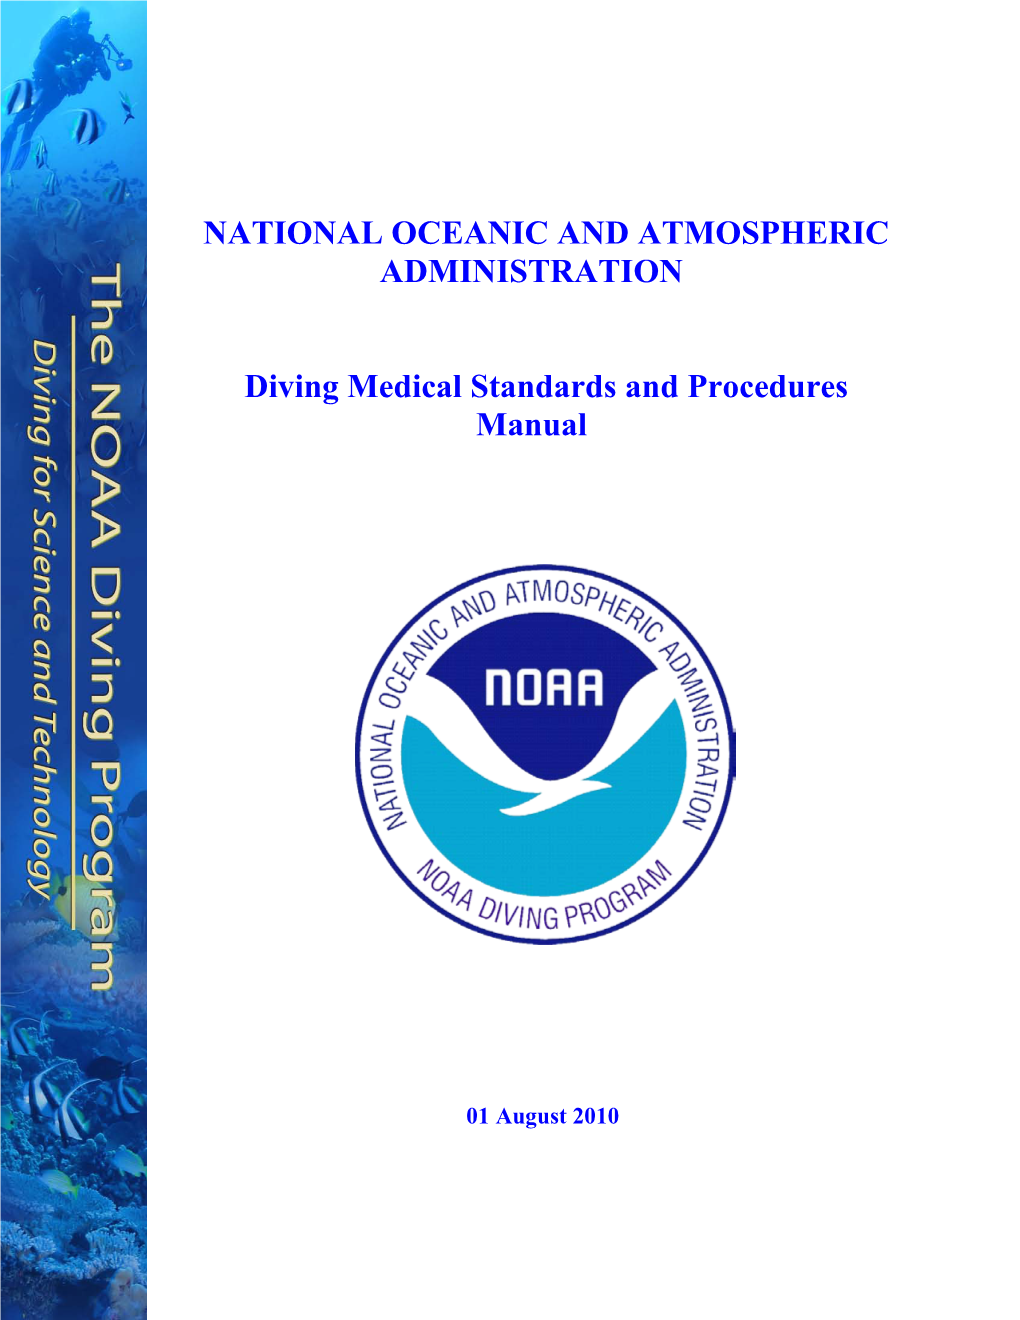 NOAA Diving Medical Standards and Procedures Manual